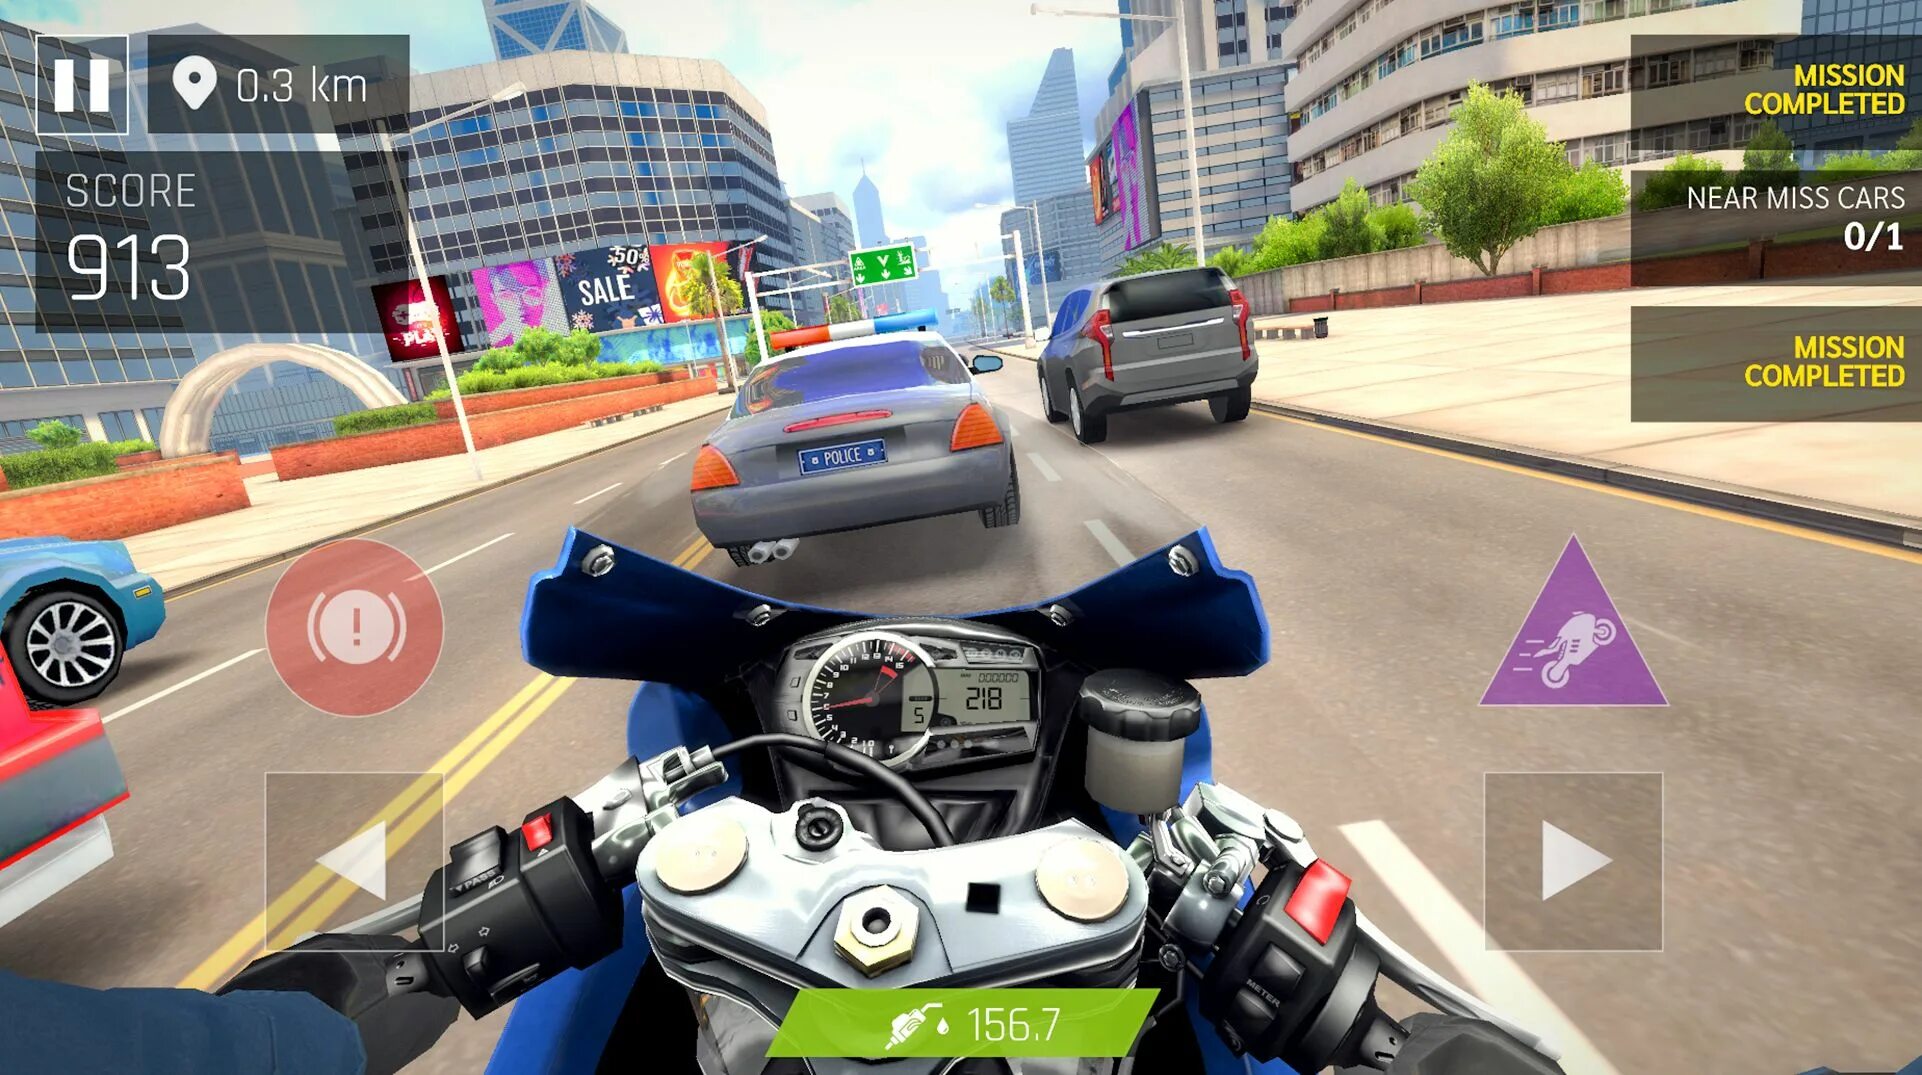 Traffic Rider мотоциклы. Трафик Райдер мотоцикл. Игра про мотоциклы трафик Райдер. Мопед игра Traffic Rider.